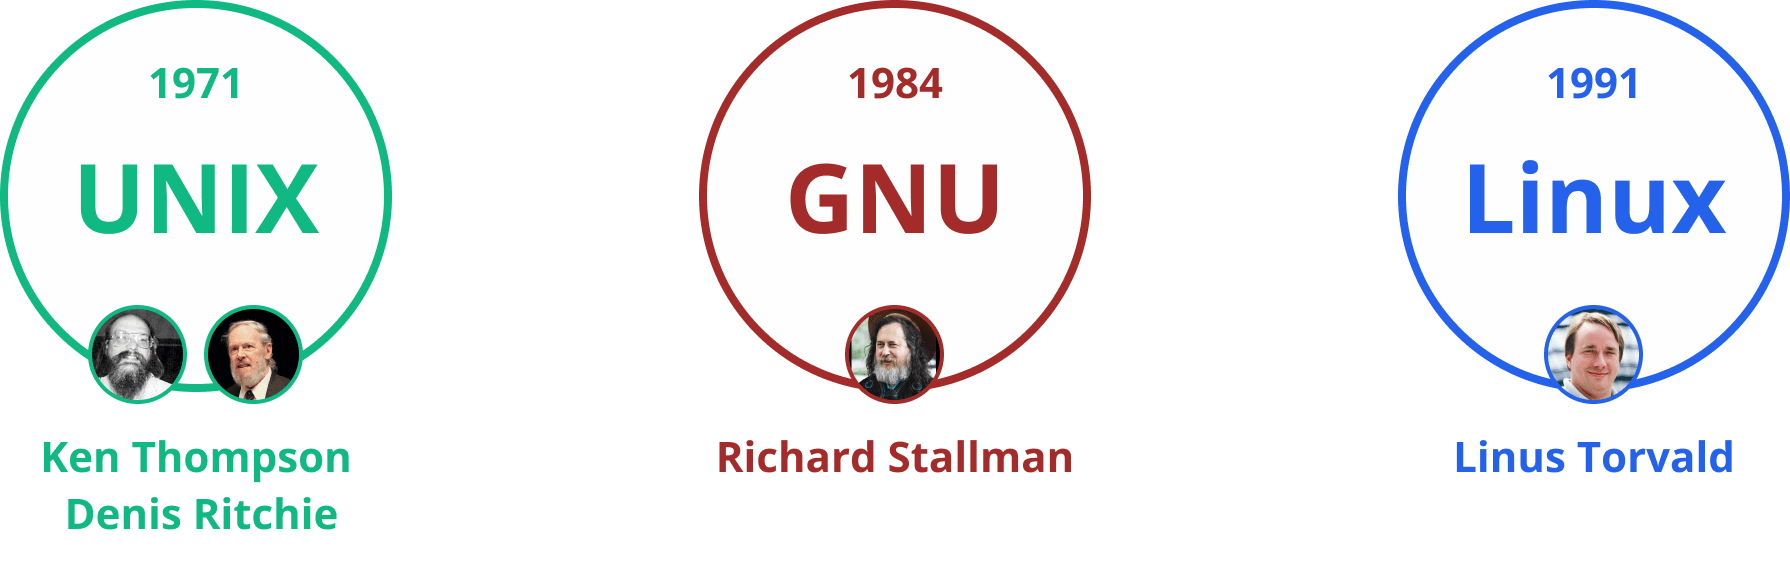 Birth of UNIX, GNU and Linux